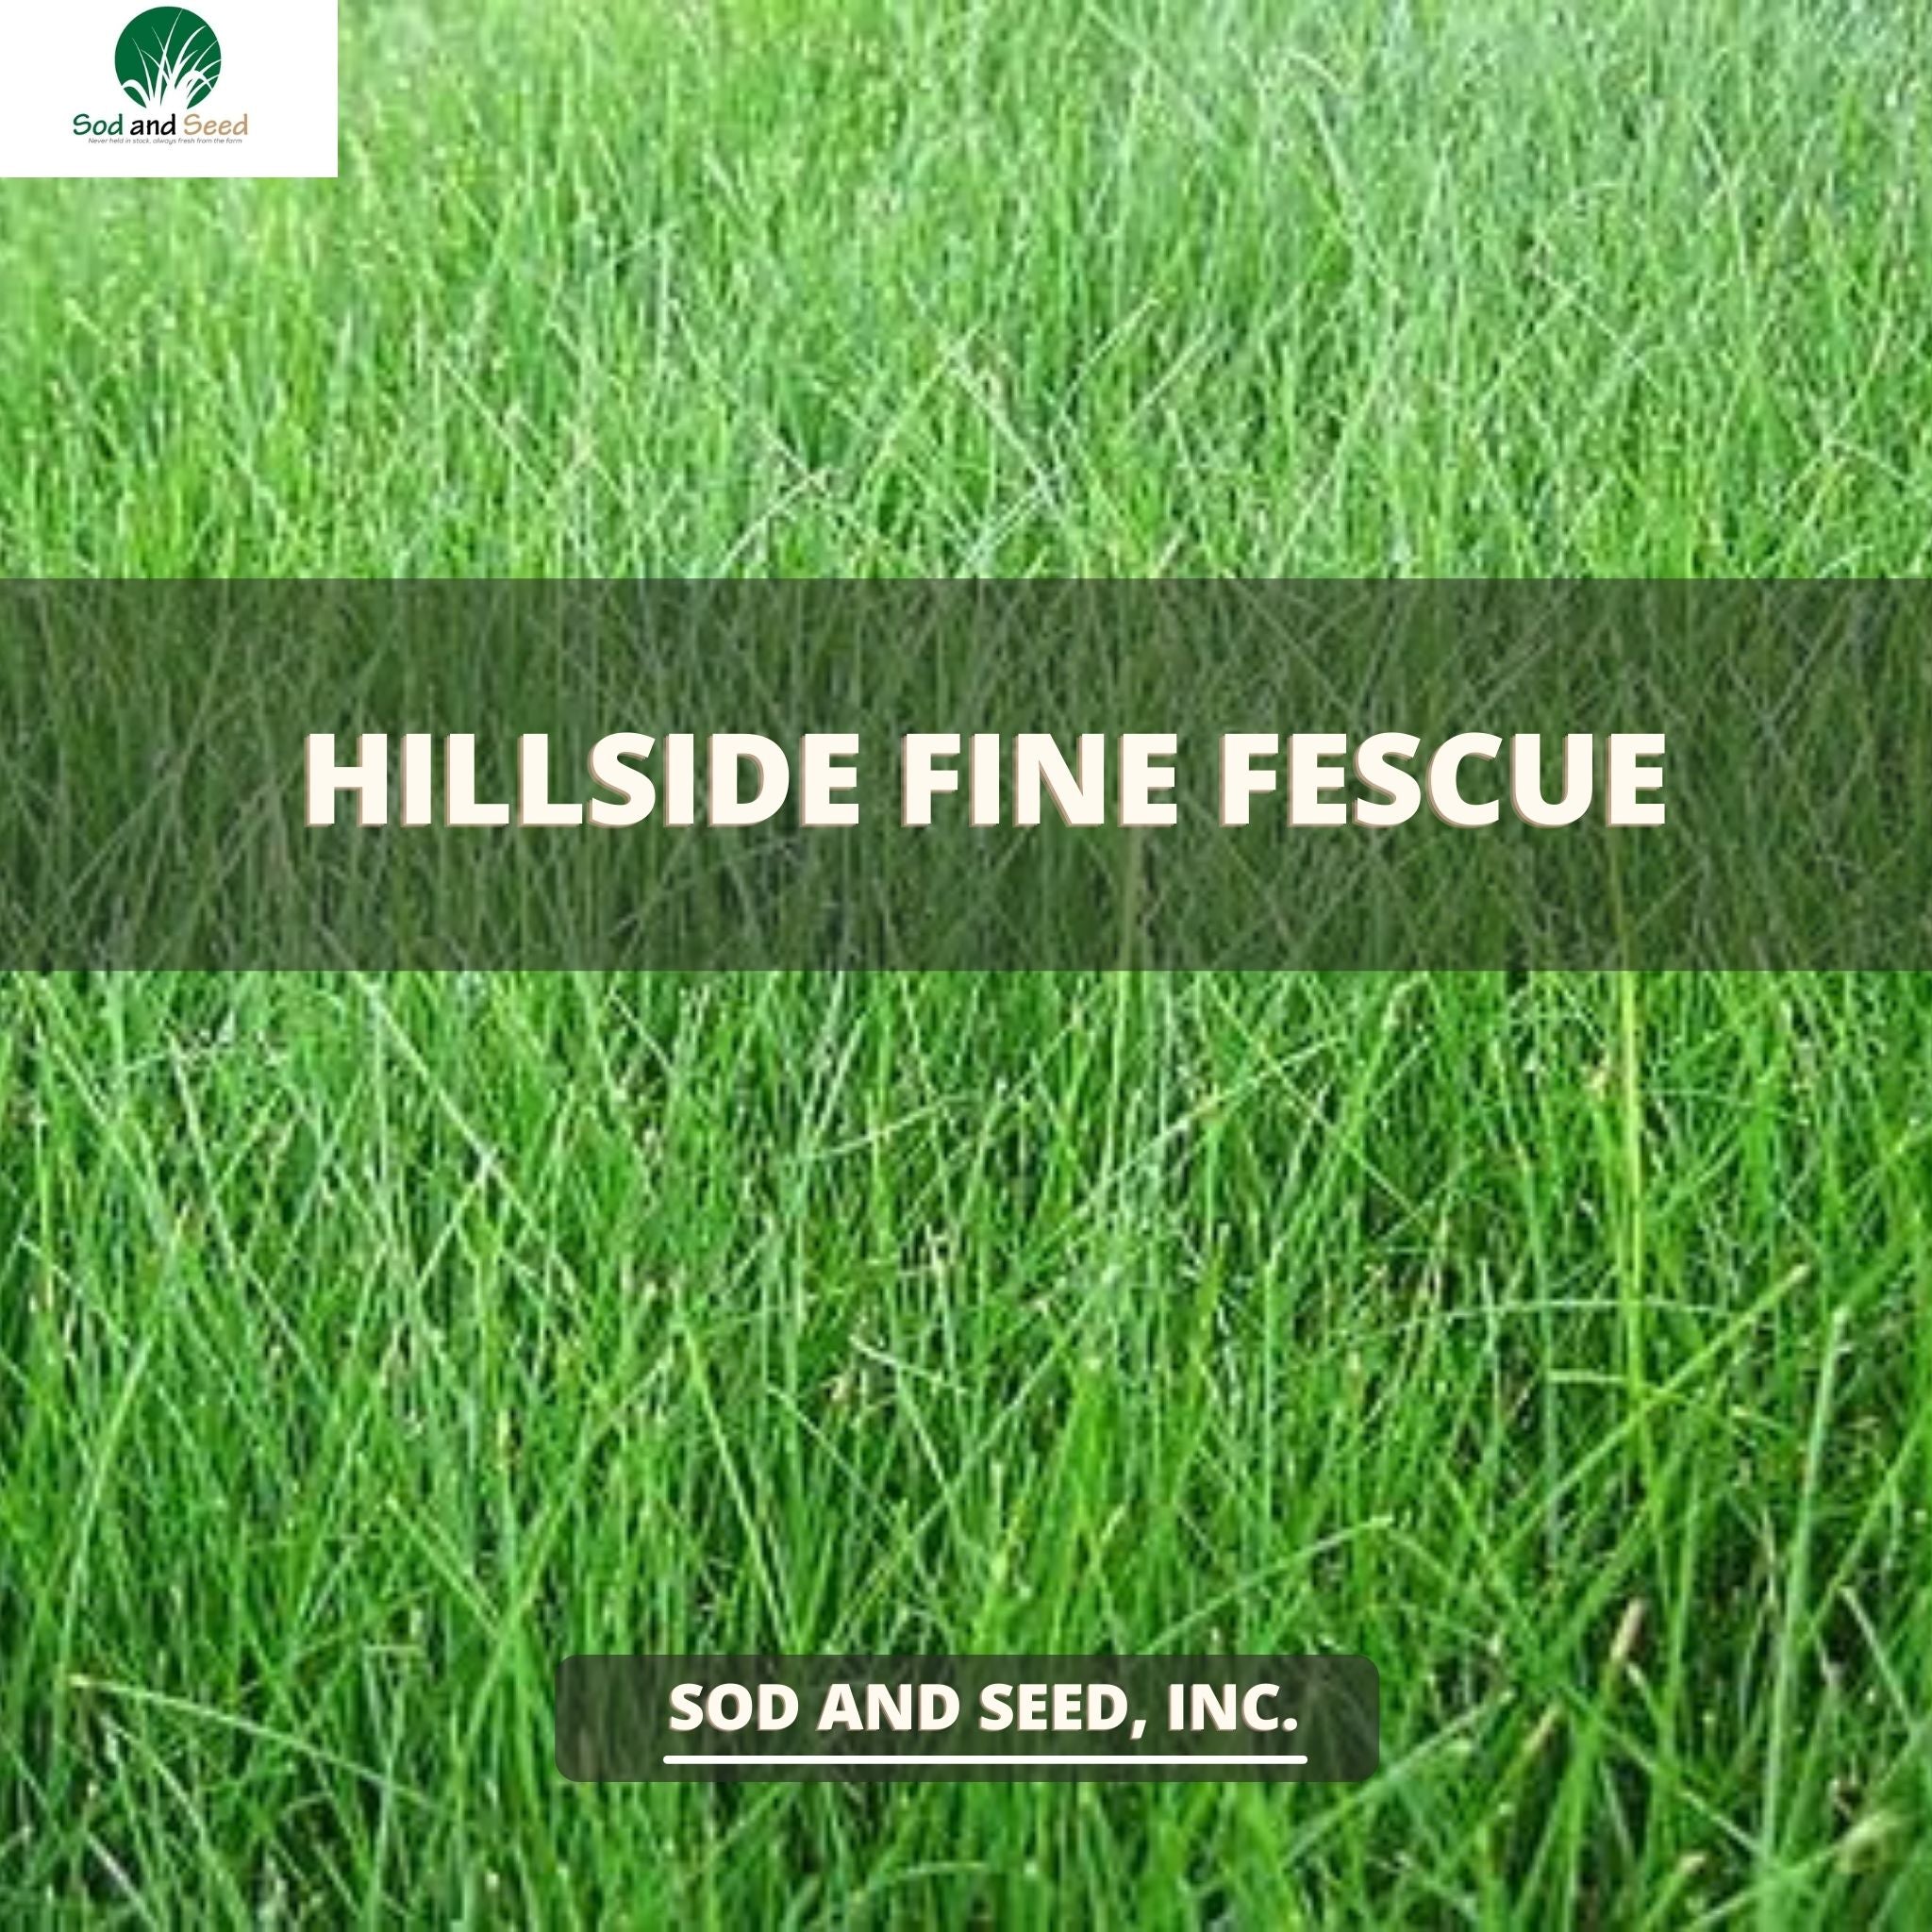 Hillside Fine Fescue – Sod and Seed, Inc.